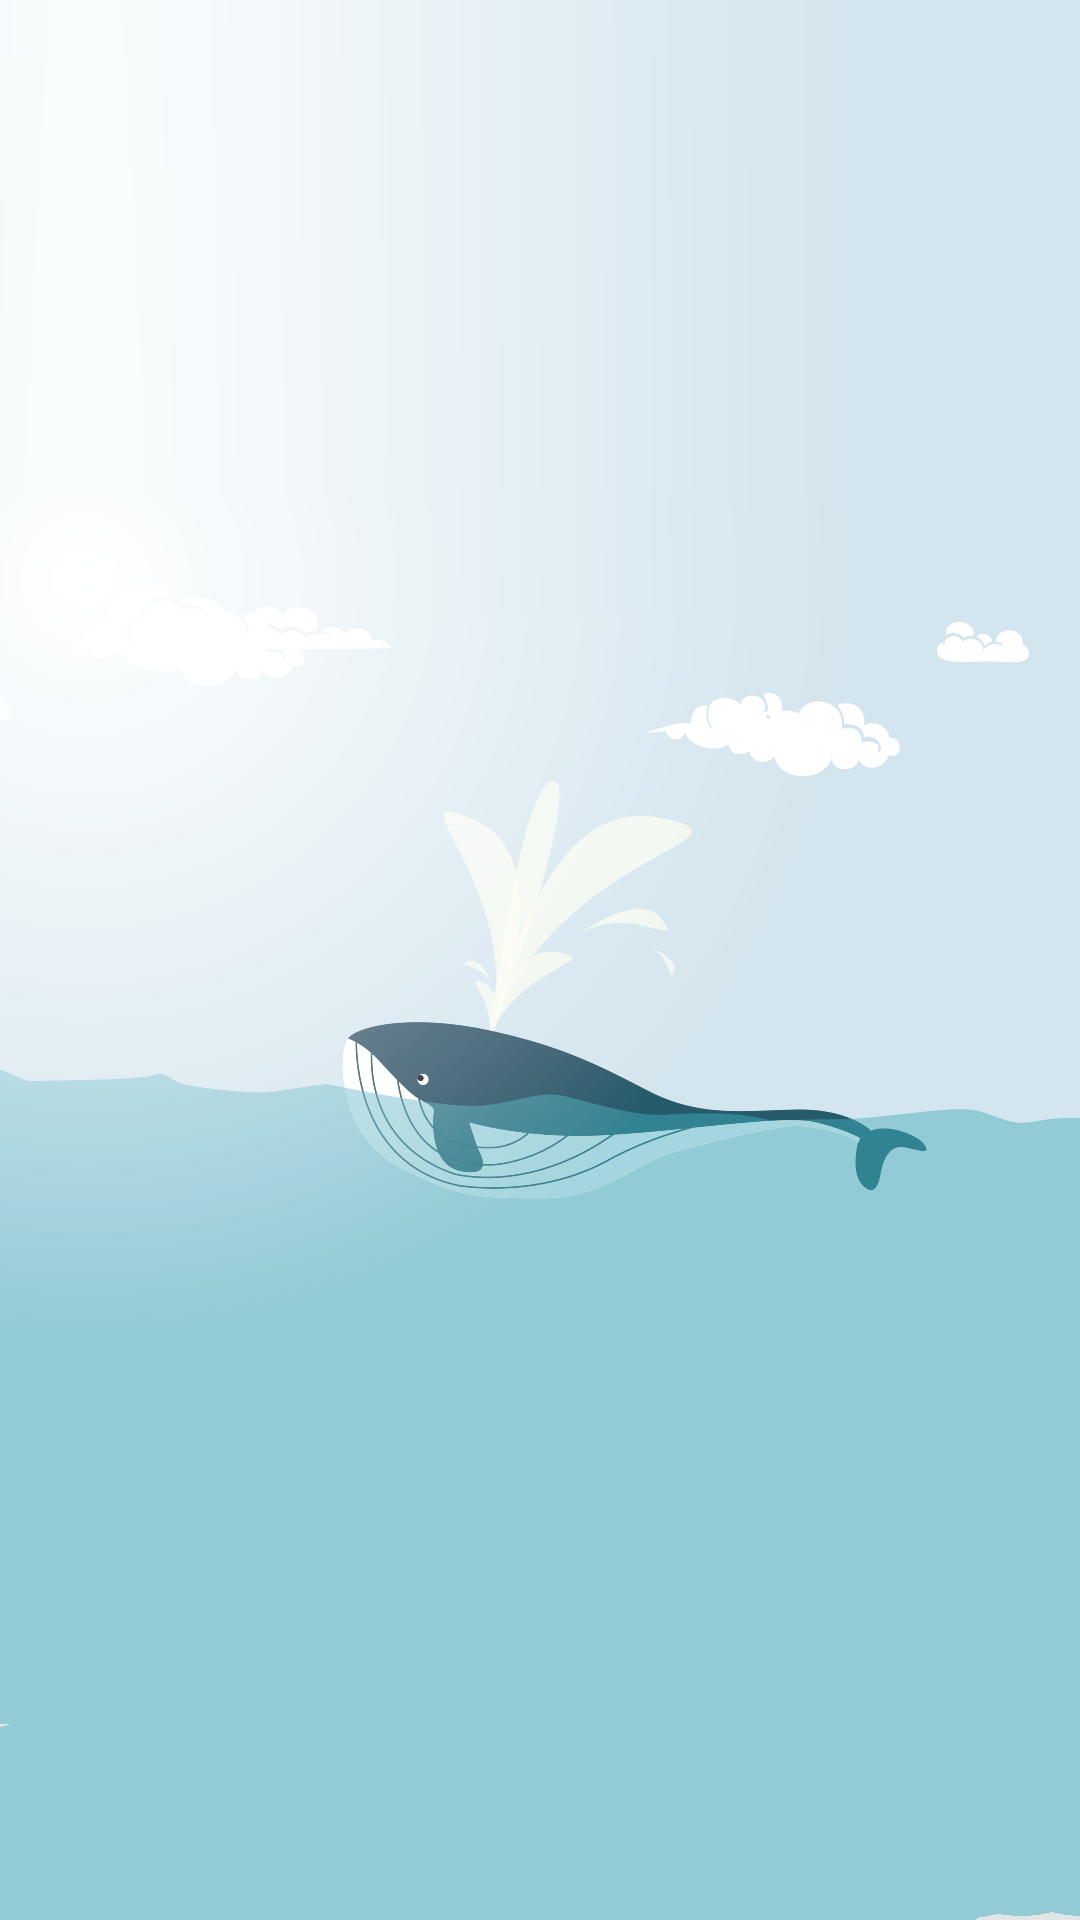 Minimal iPhone wallpaper ❤ Happy whale. Latar belakang, Paus